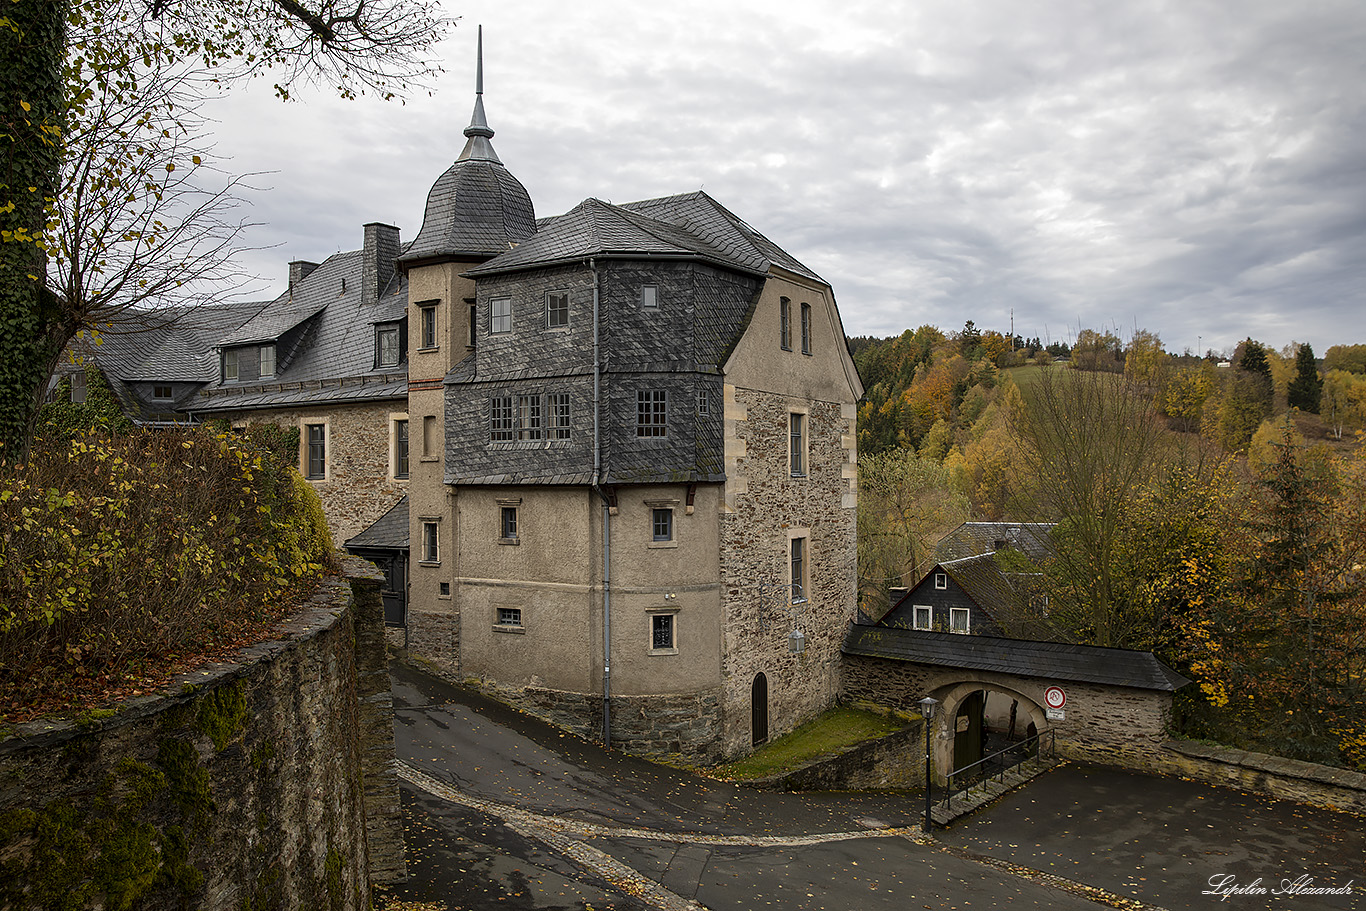 Замок Лауэнштайн (Burg Lauenstein) - Лауэнштайн (Lauenstein) - Германия (Deutschland)